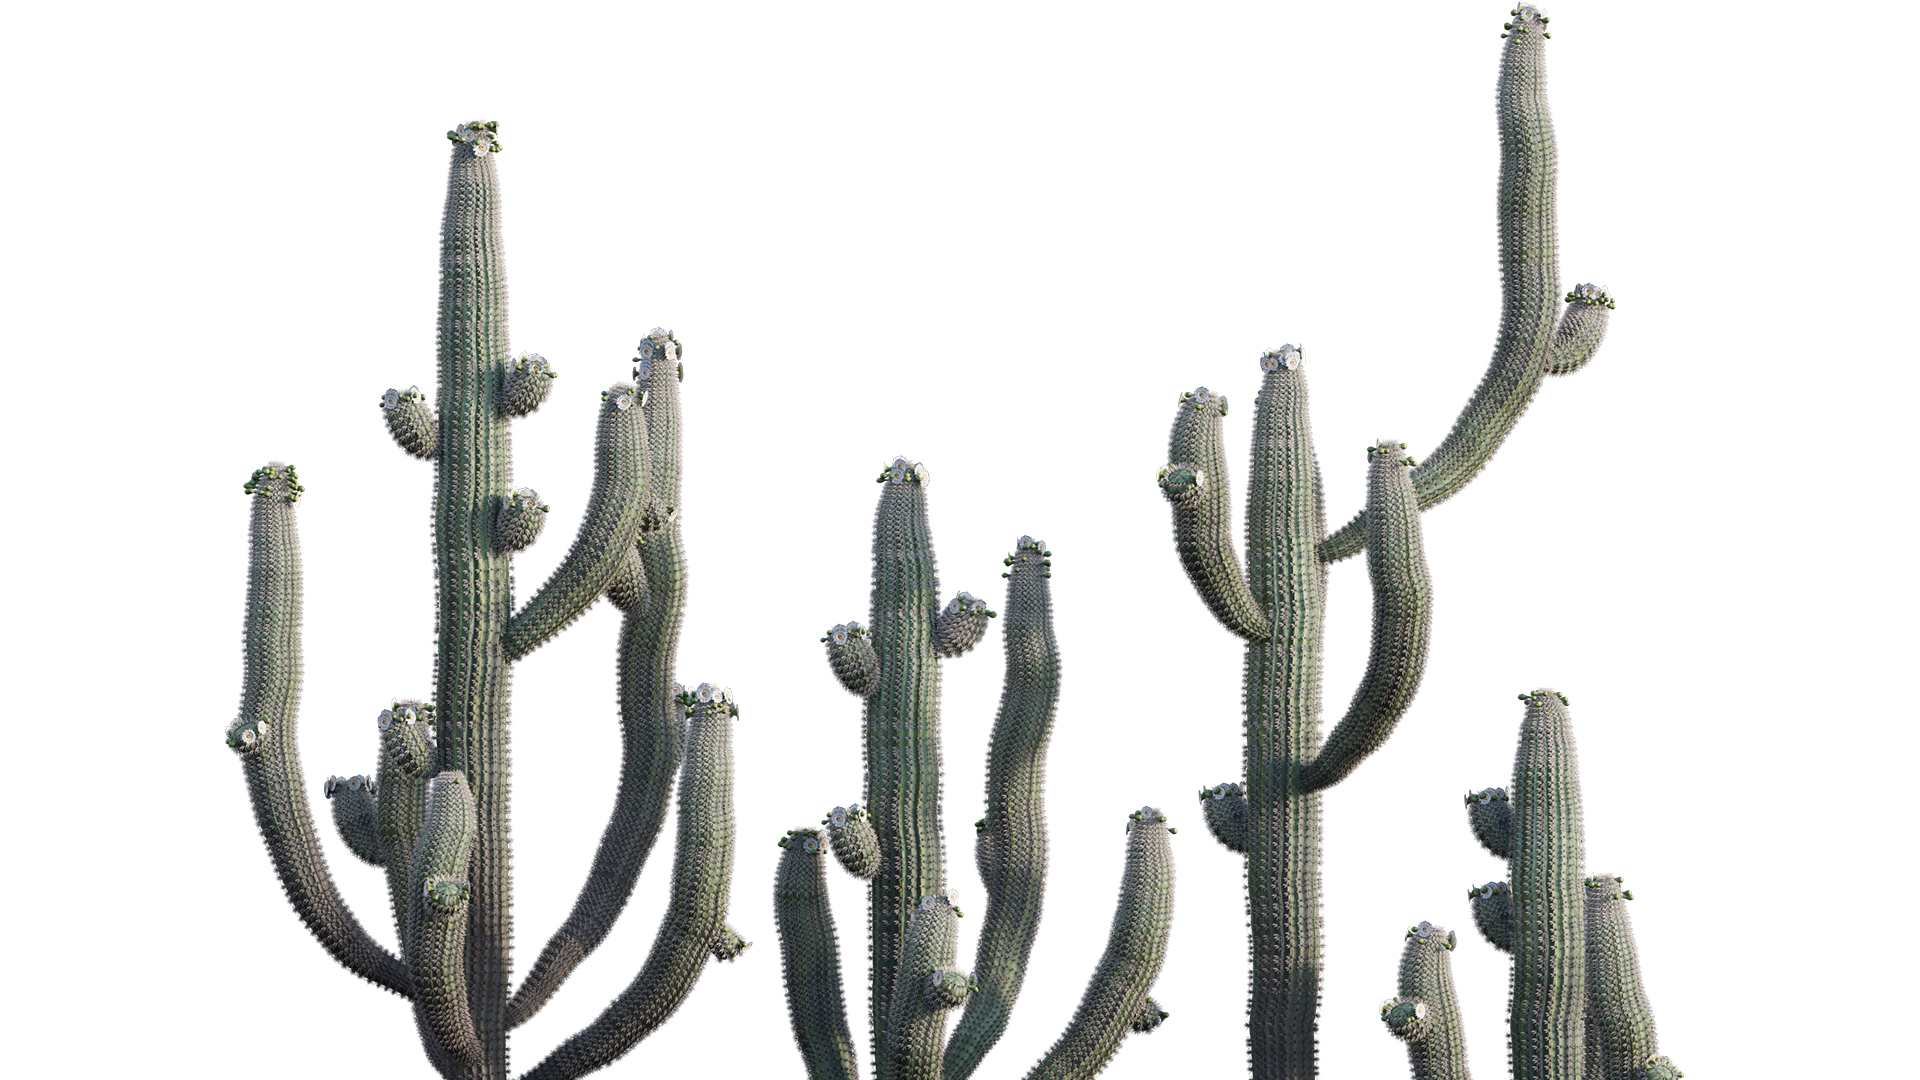 Carnegiea Gigantea - Saguaro